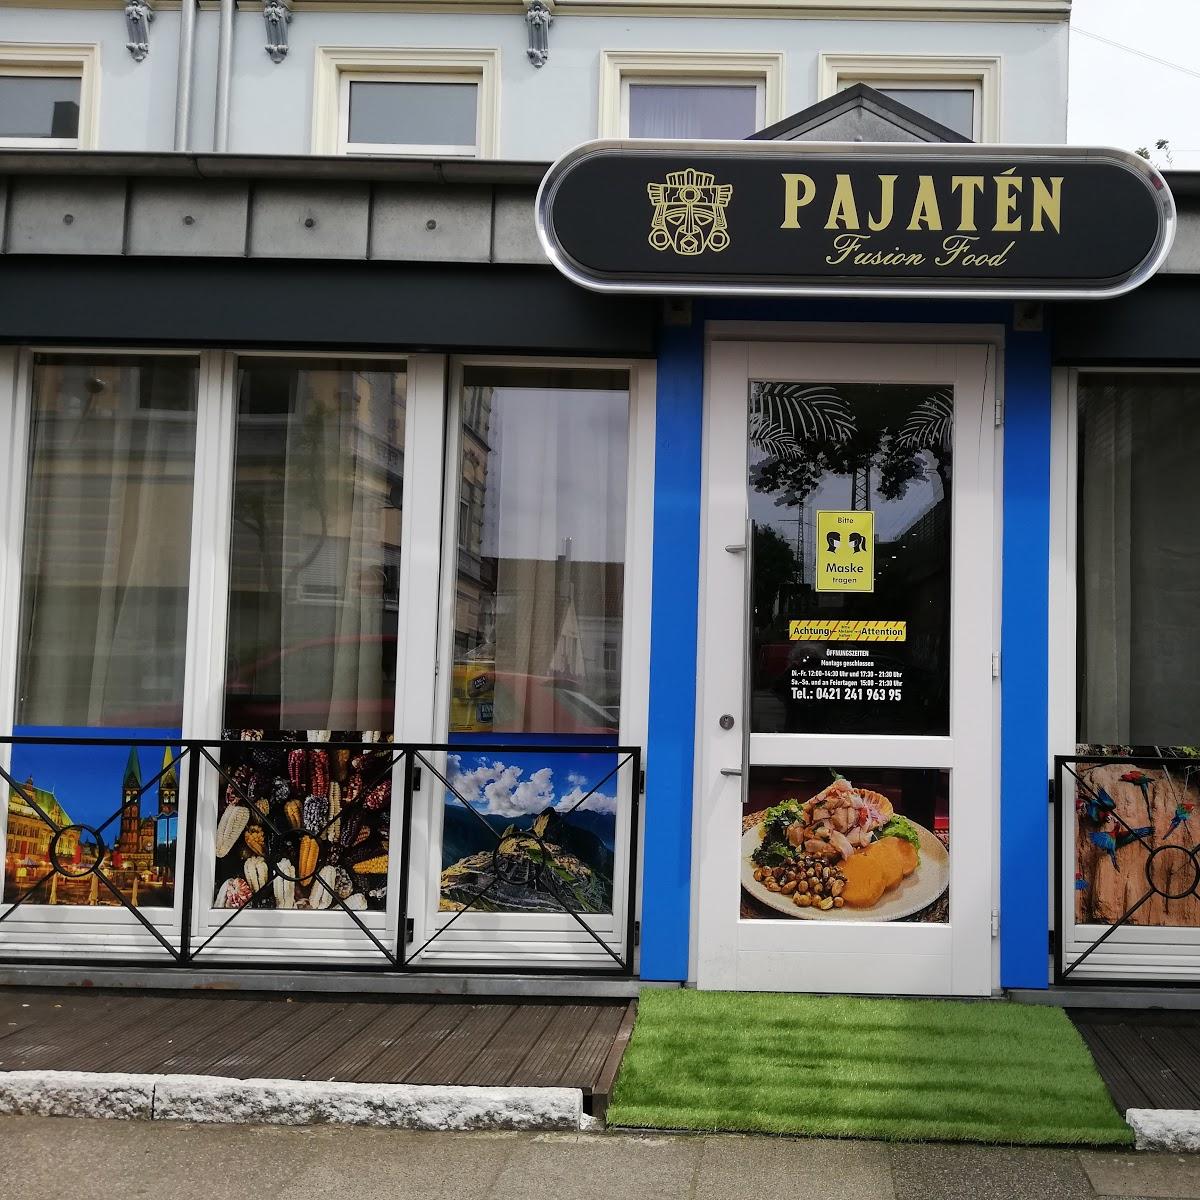 Restaurant "Pajaten Fusion Food" in Bremen